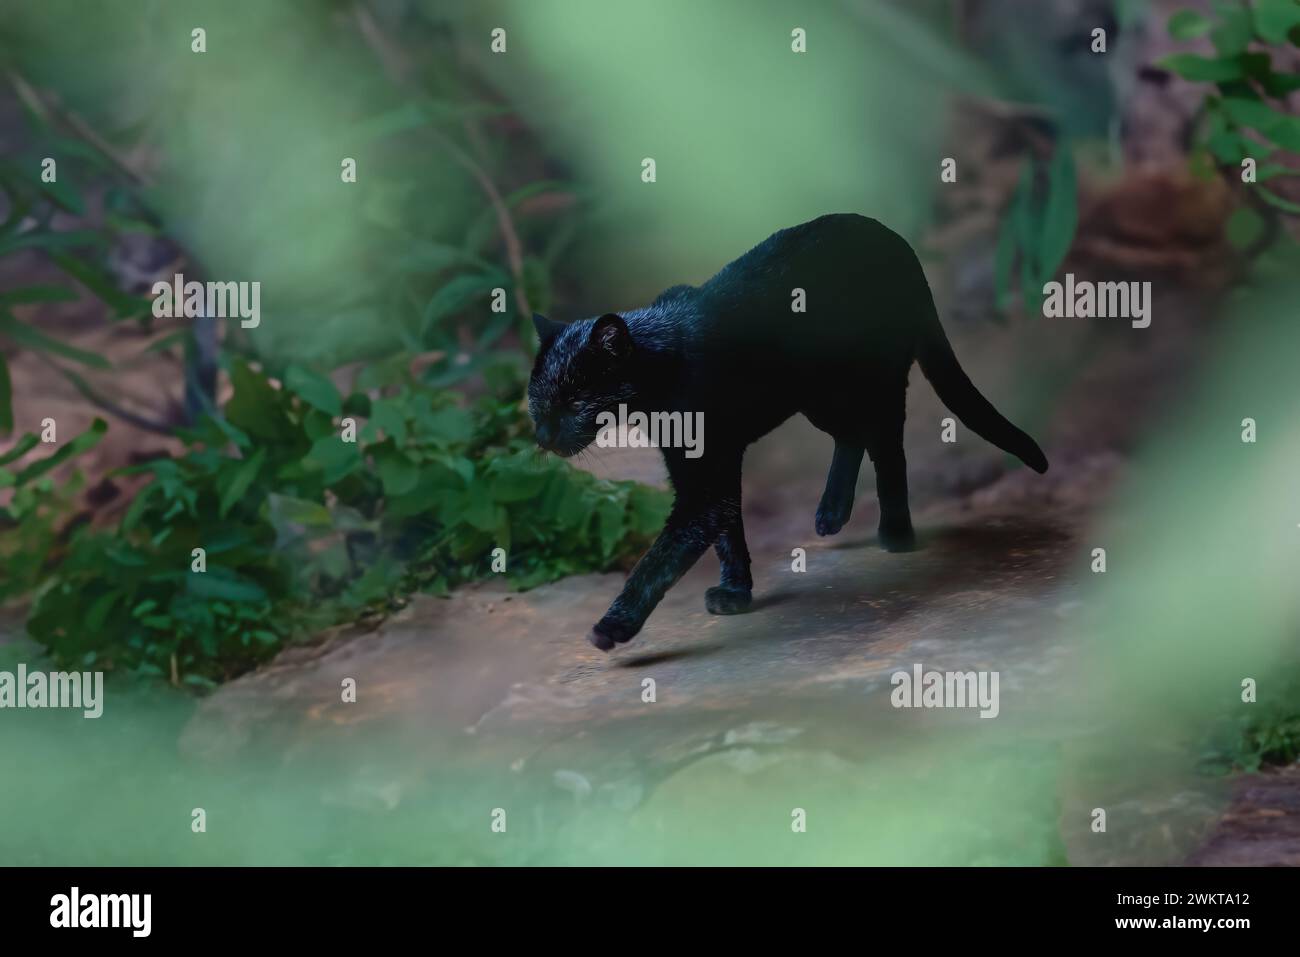 Black Geoffroy's Cat (Leopardus geoffroyi) - Melanistisch Stockfoto